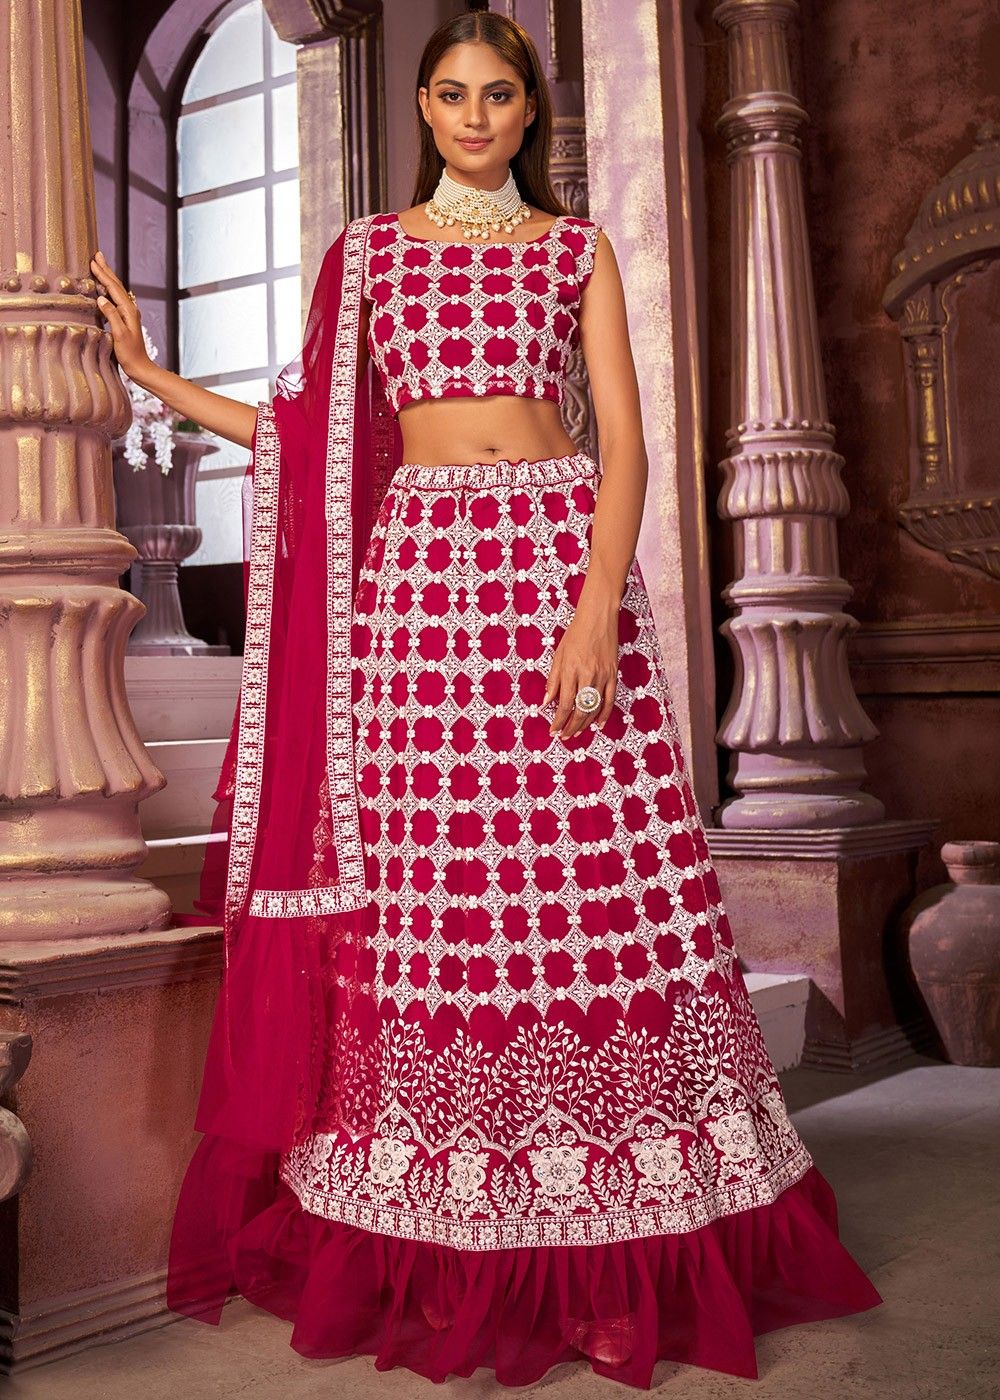 Fantastic Multicolor Thread Embroidery Velvet Bridal Lehenga Choli at Rs  11740 | दुल्हन का लेहंगा in Surat | ID: 2849953800333